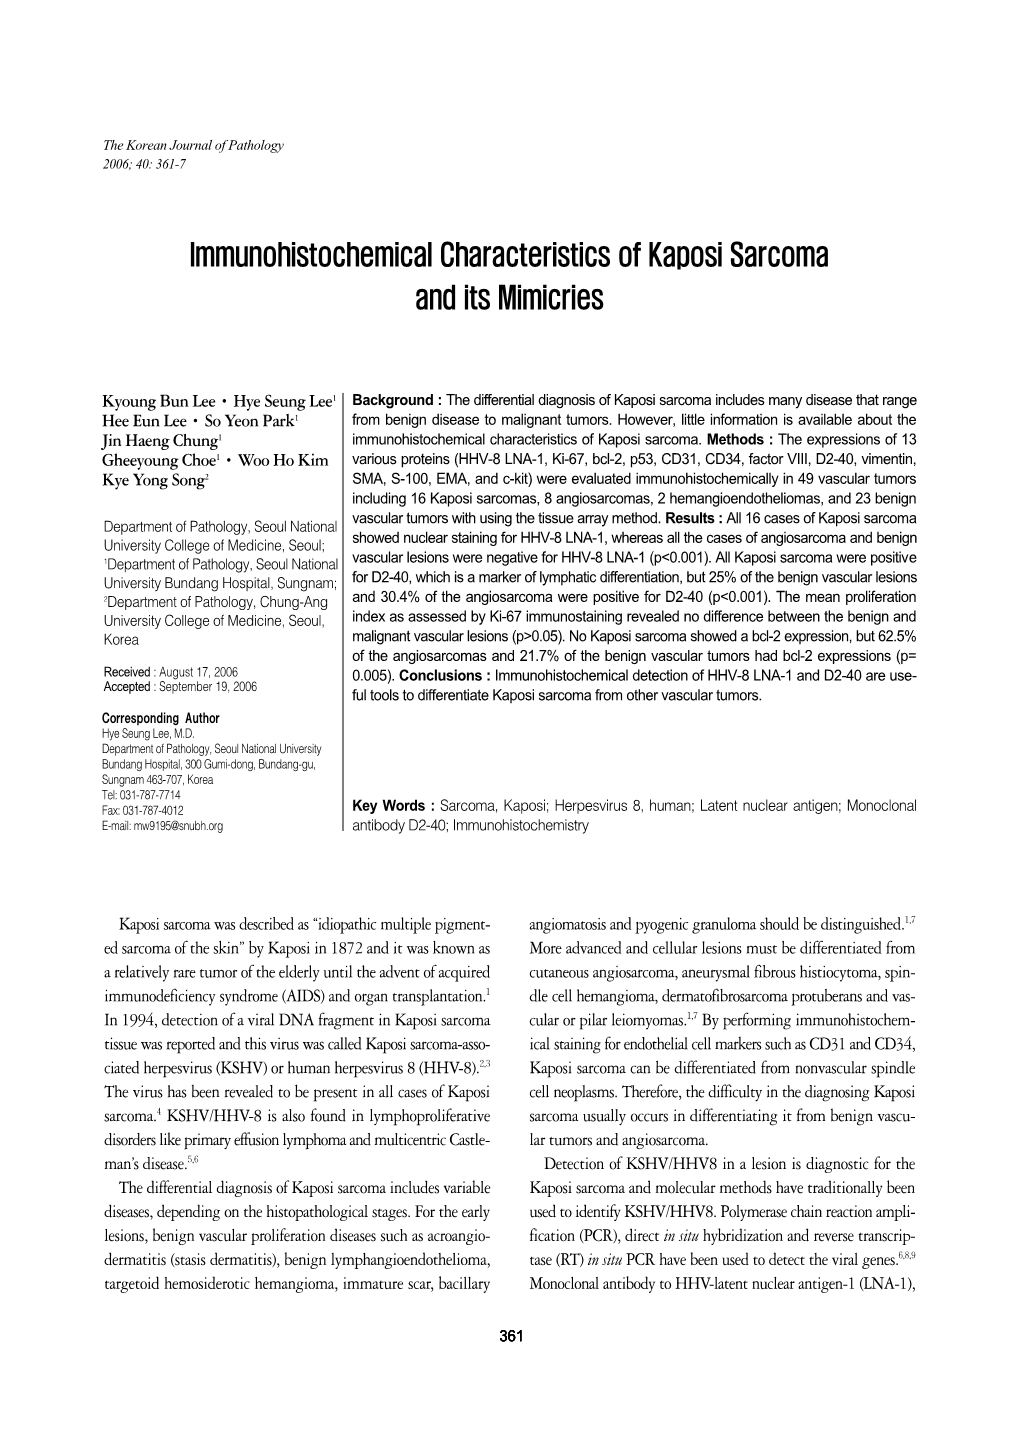 Immunohistochemical Characteristics of Kaposi Sarcoma and Its Mimicries